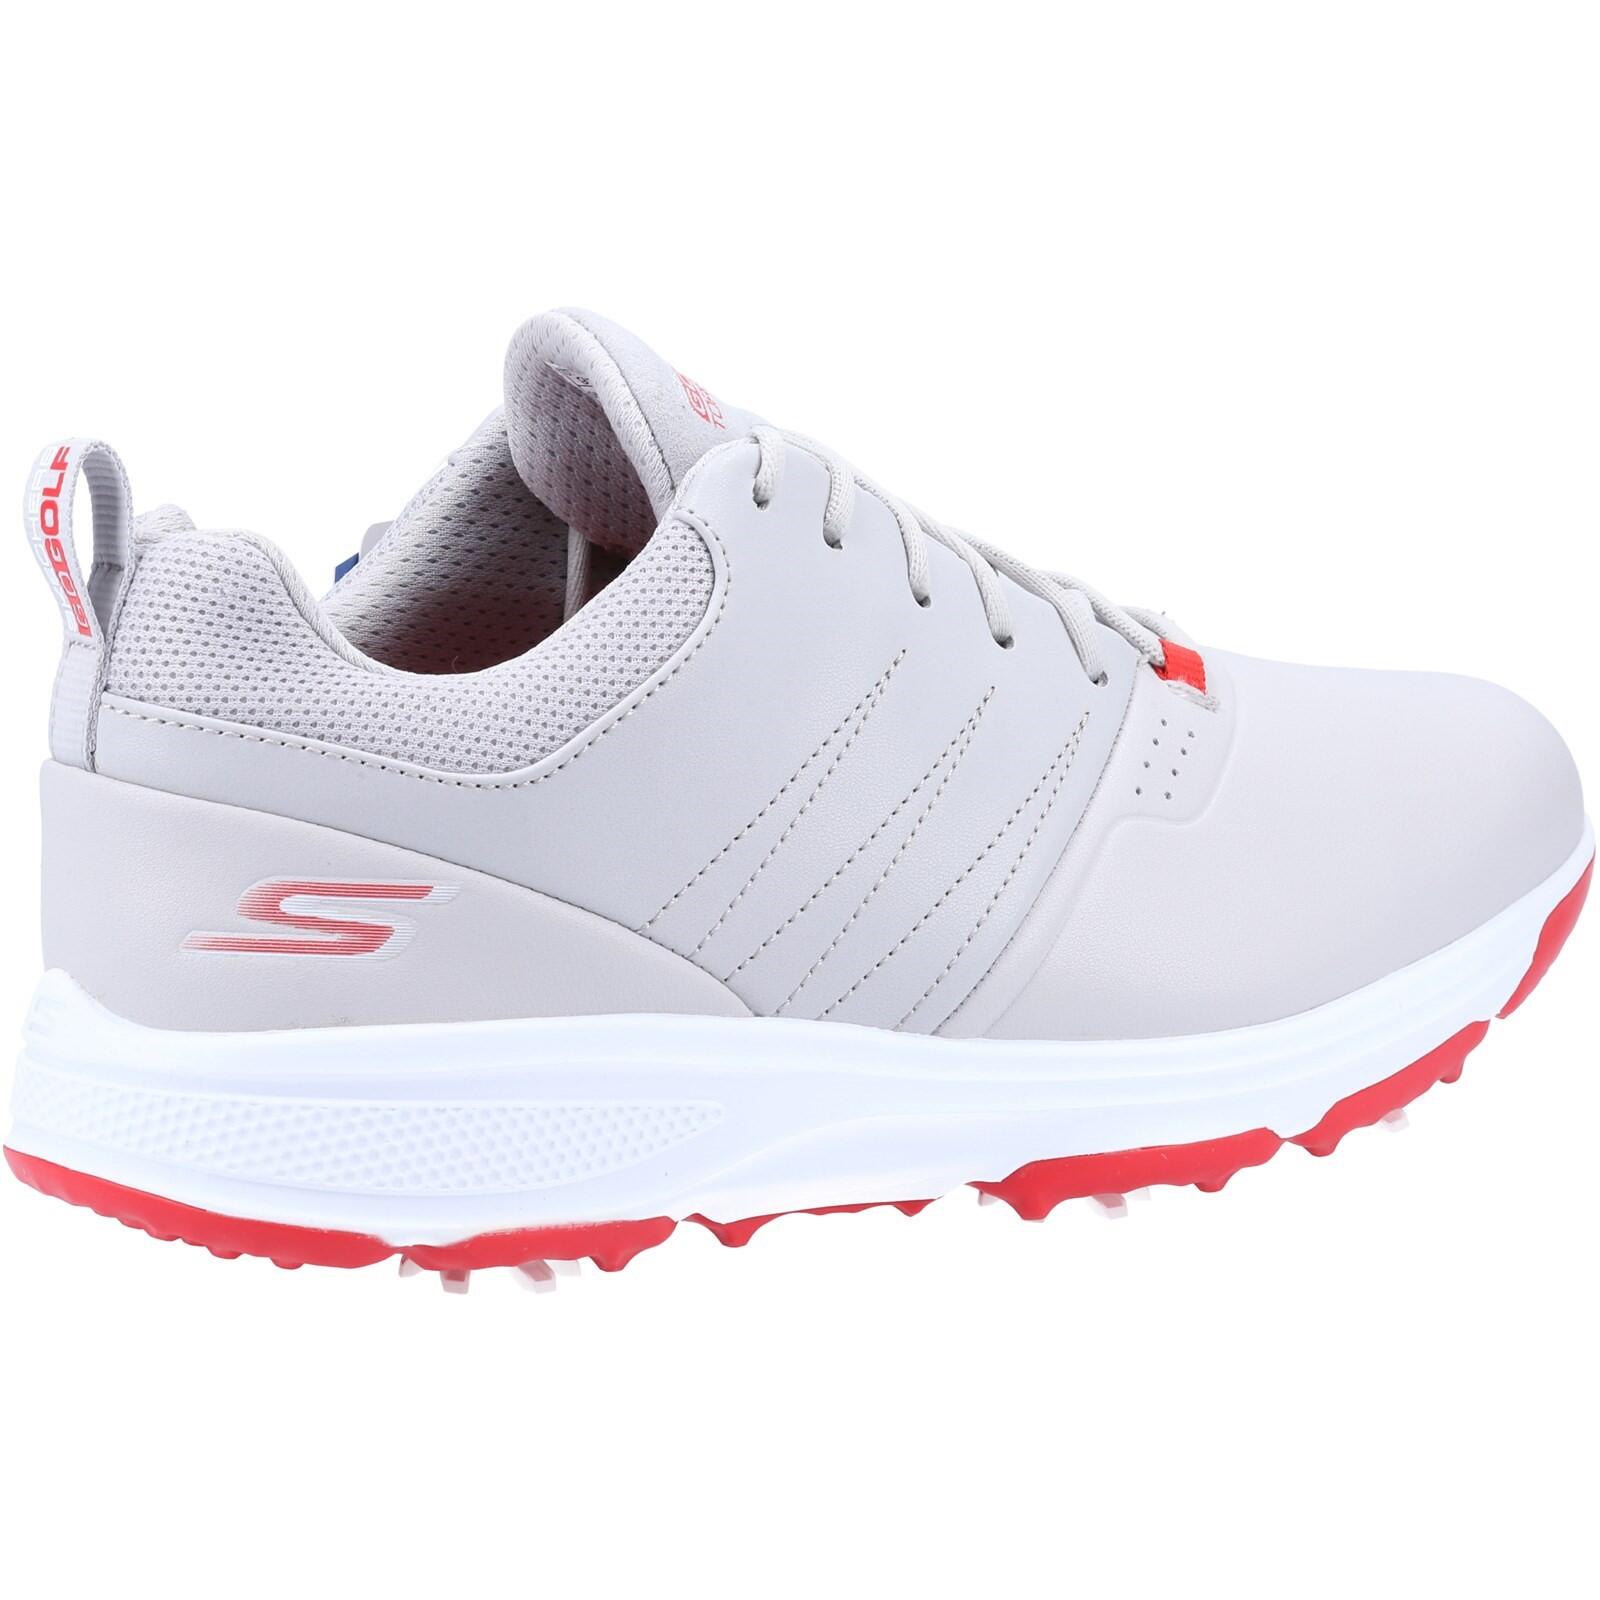 Go Golf Torque Pro Golf Shoes GREY 3/4